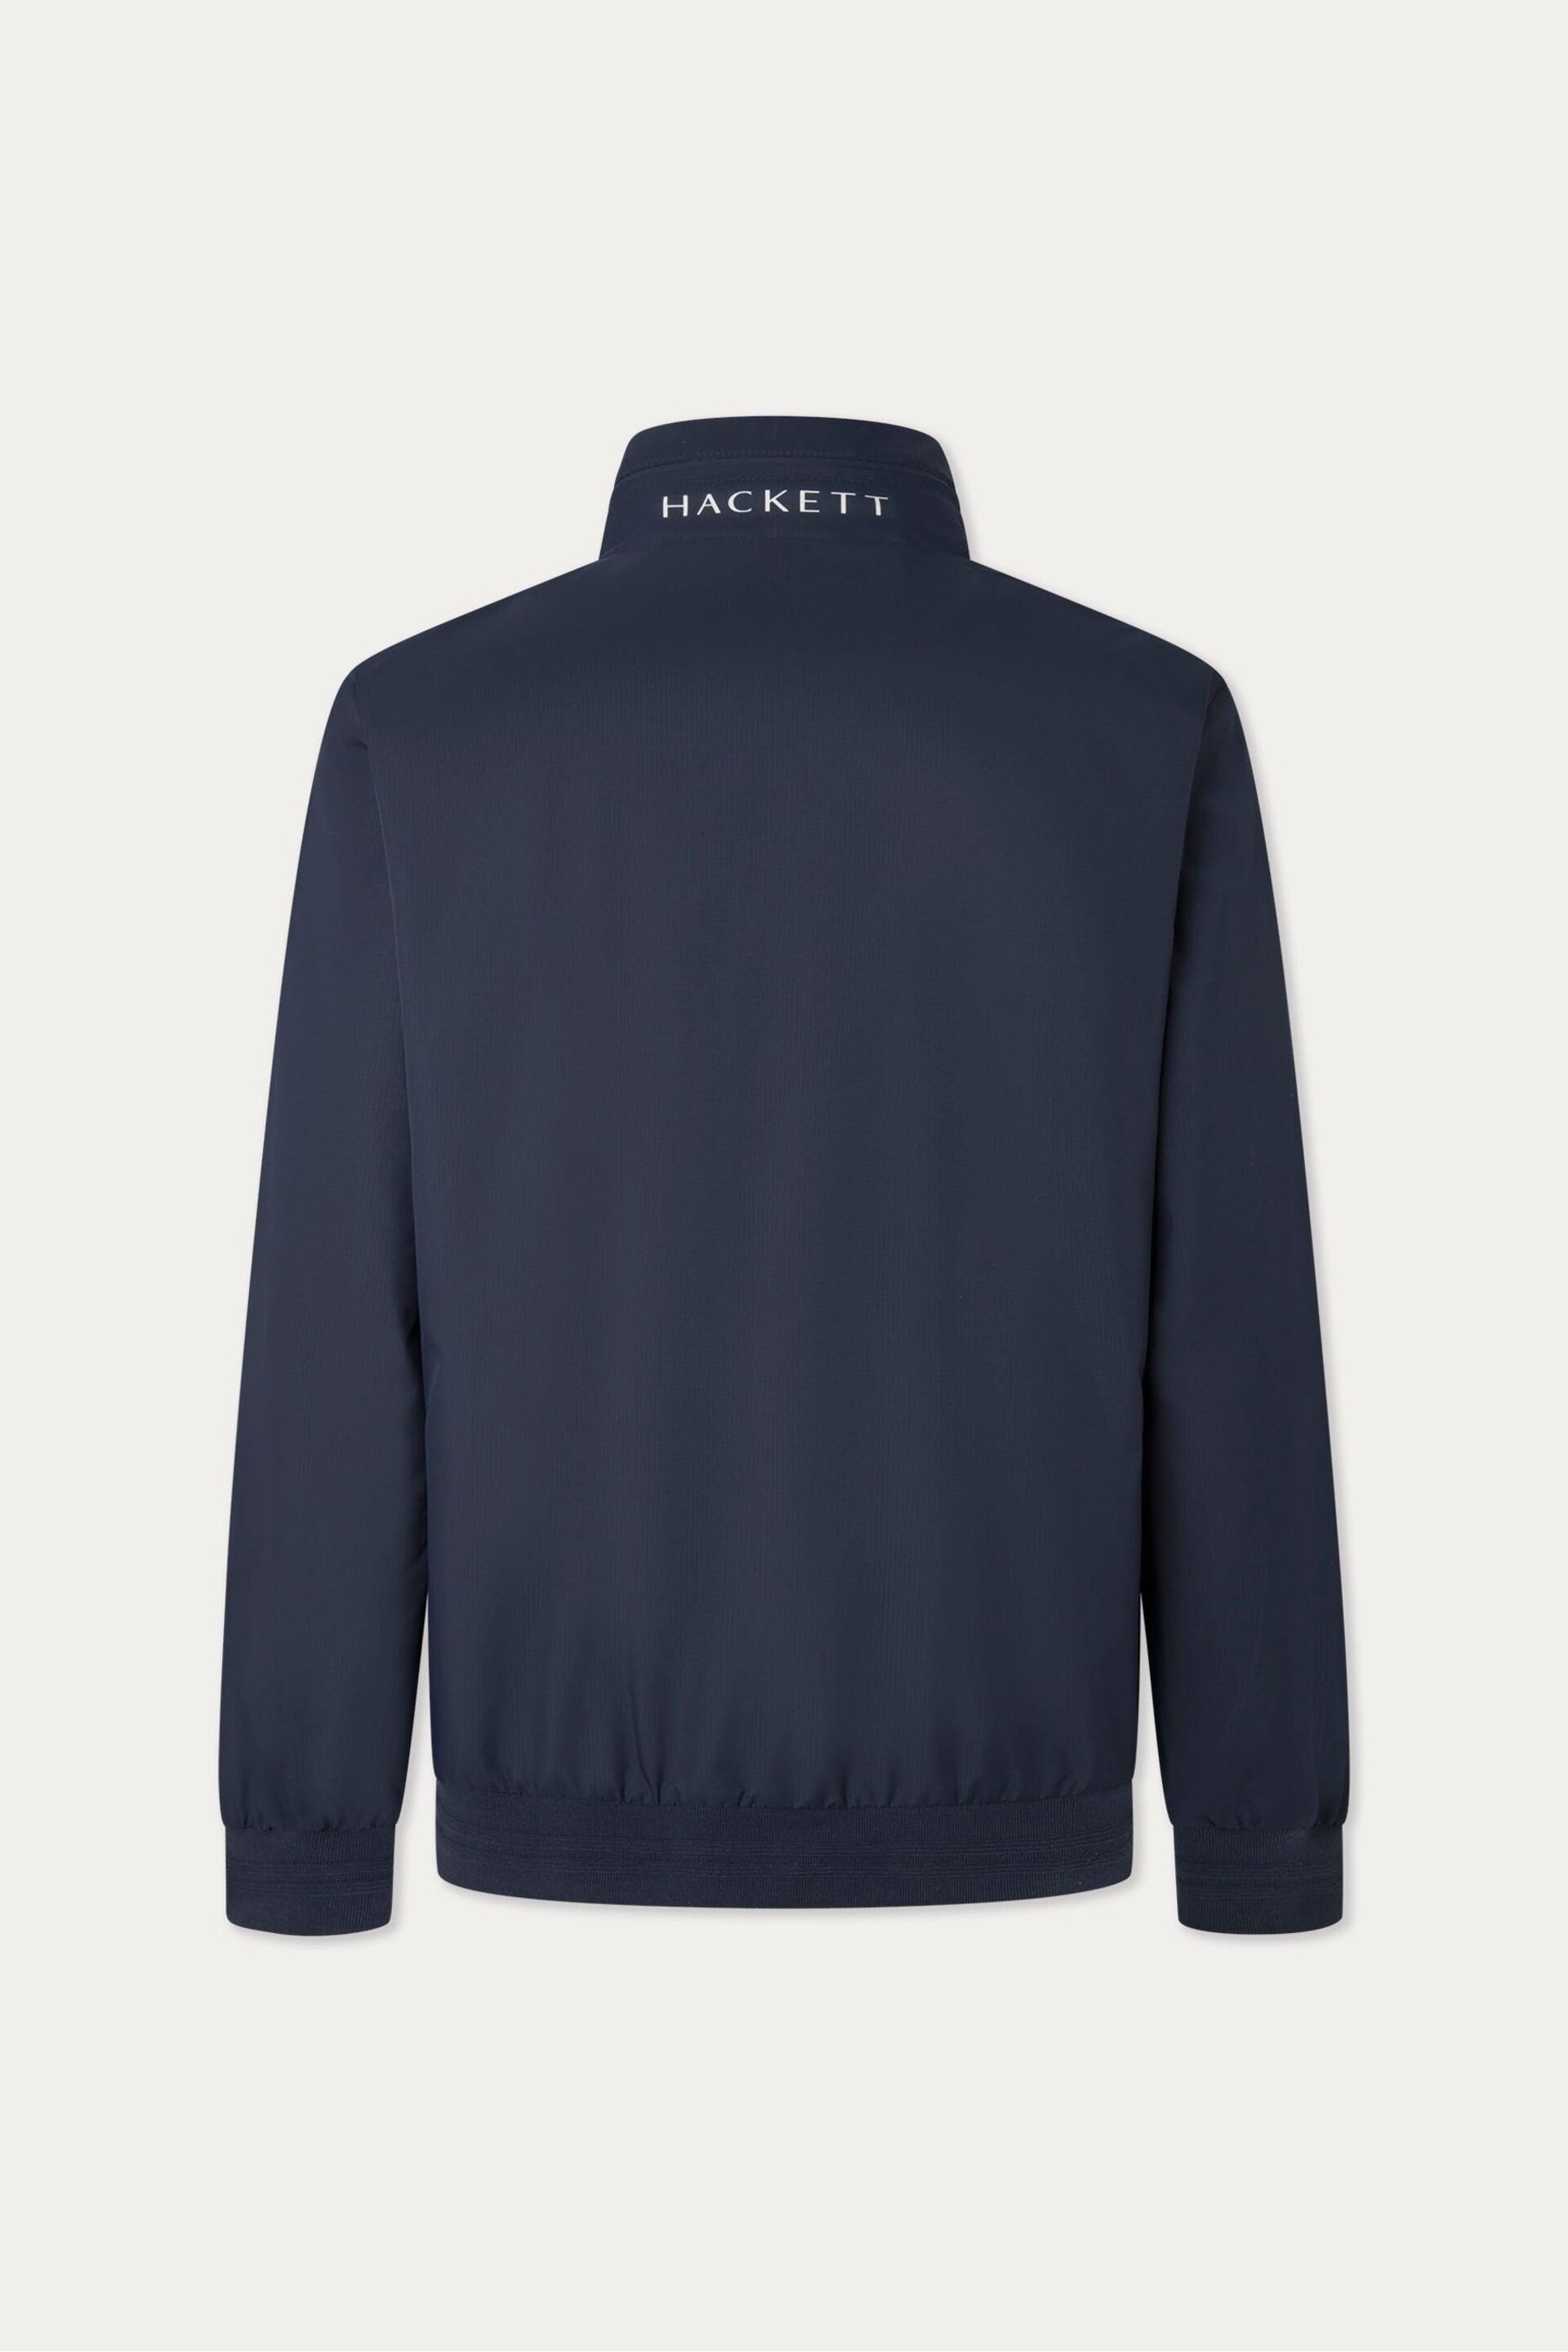 Hackett London Mens Blue Outerwear Coat - Image 2 of 5